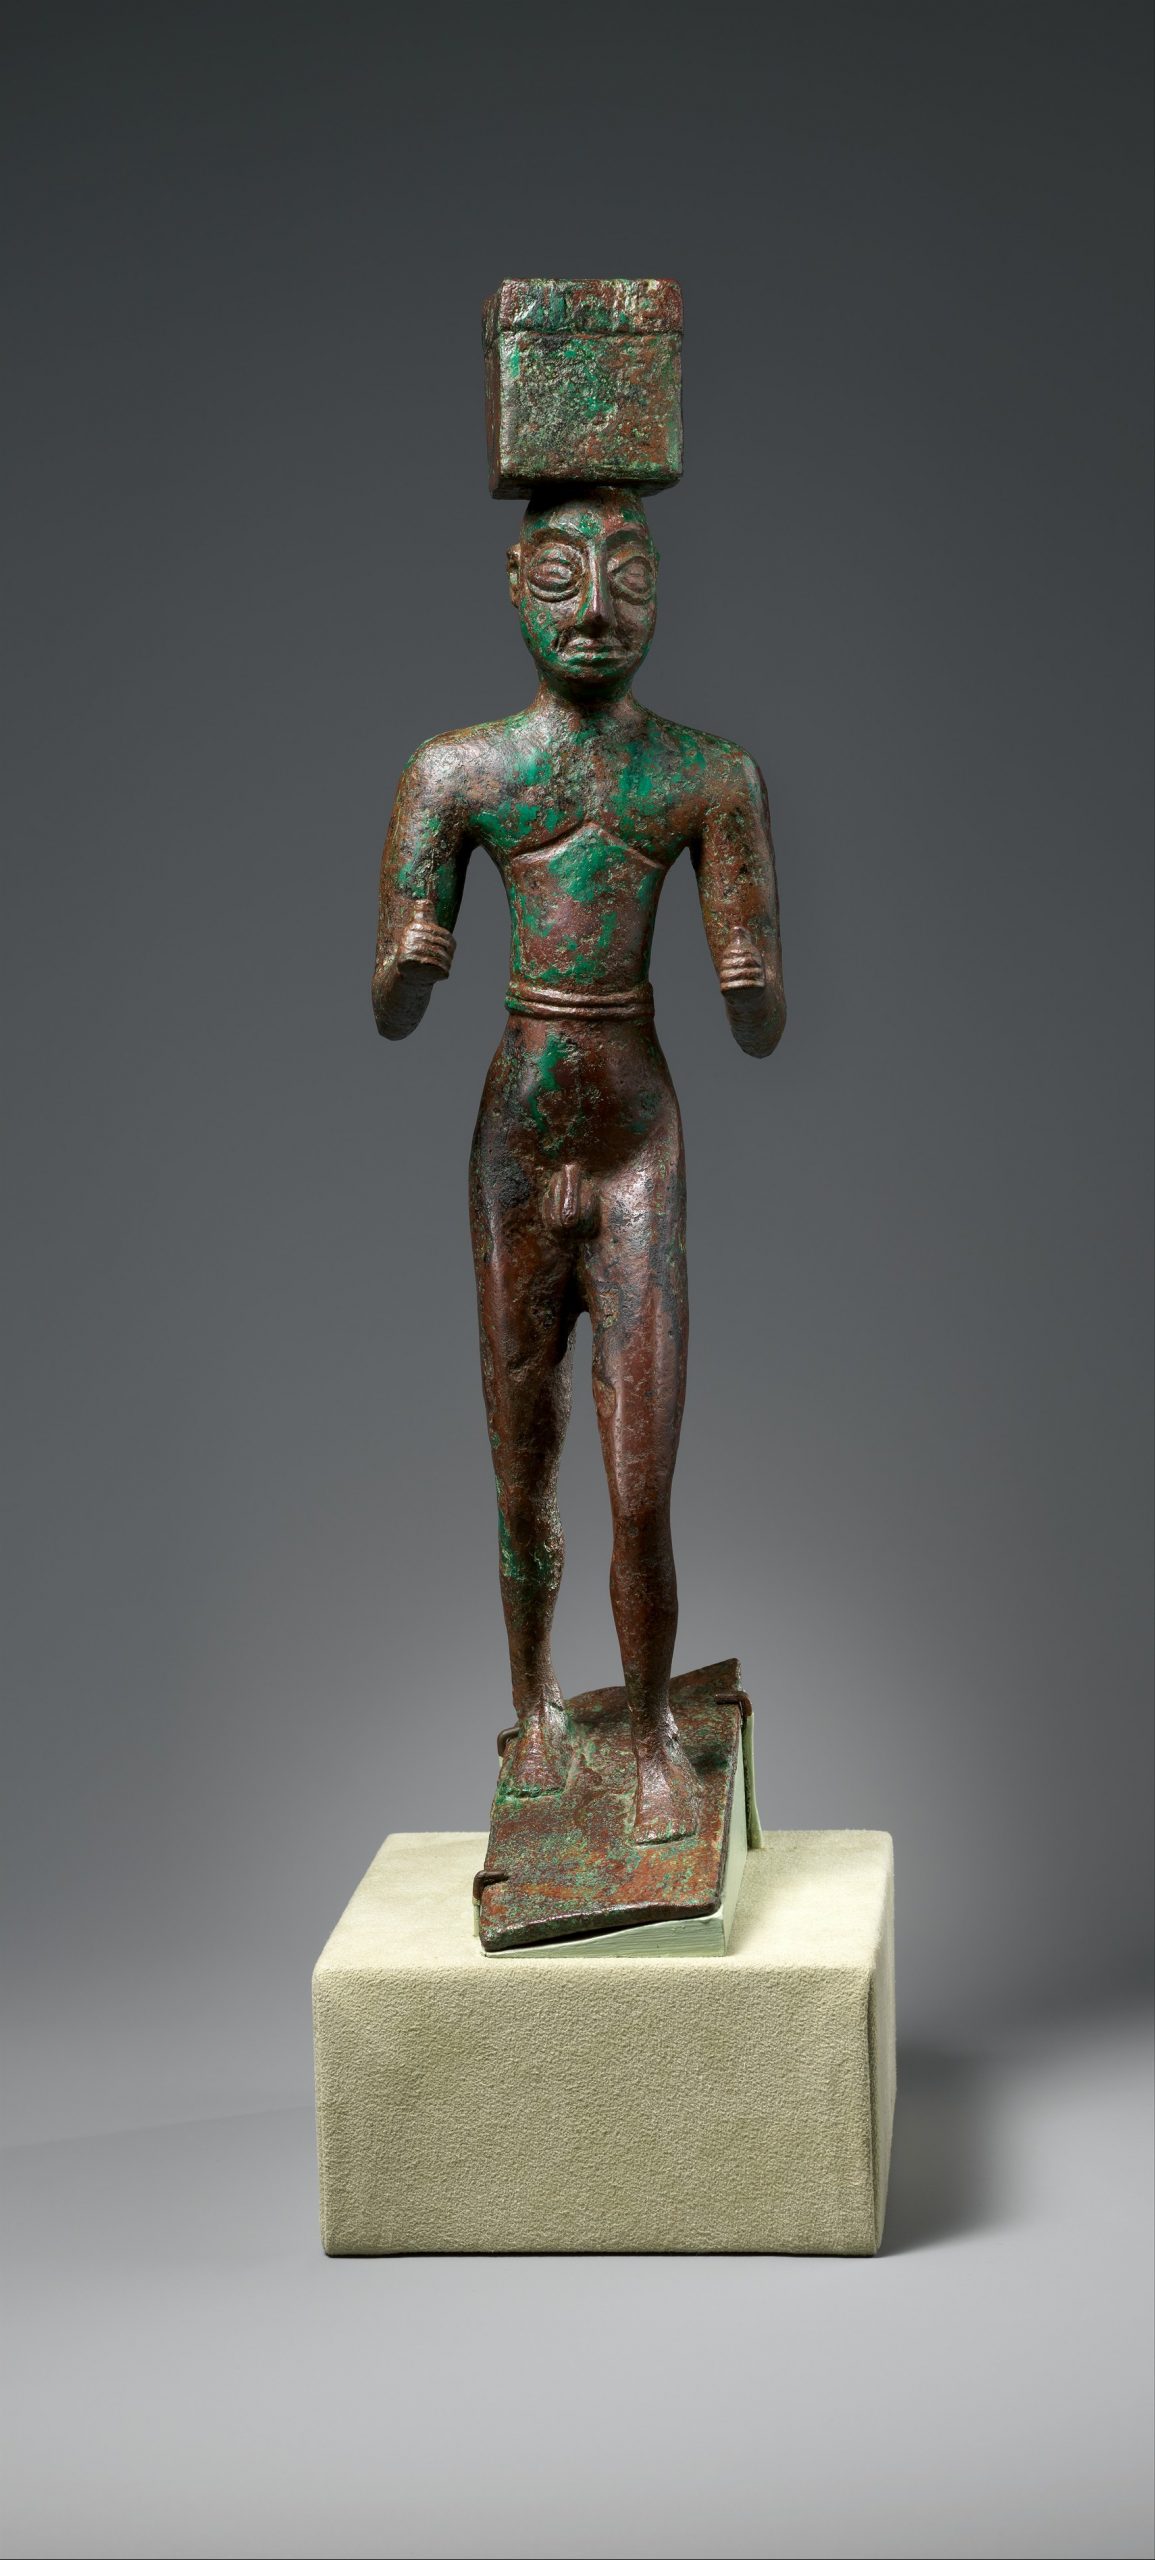 The Met Returns an Ancient Sumerian Sculpture to Iraq